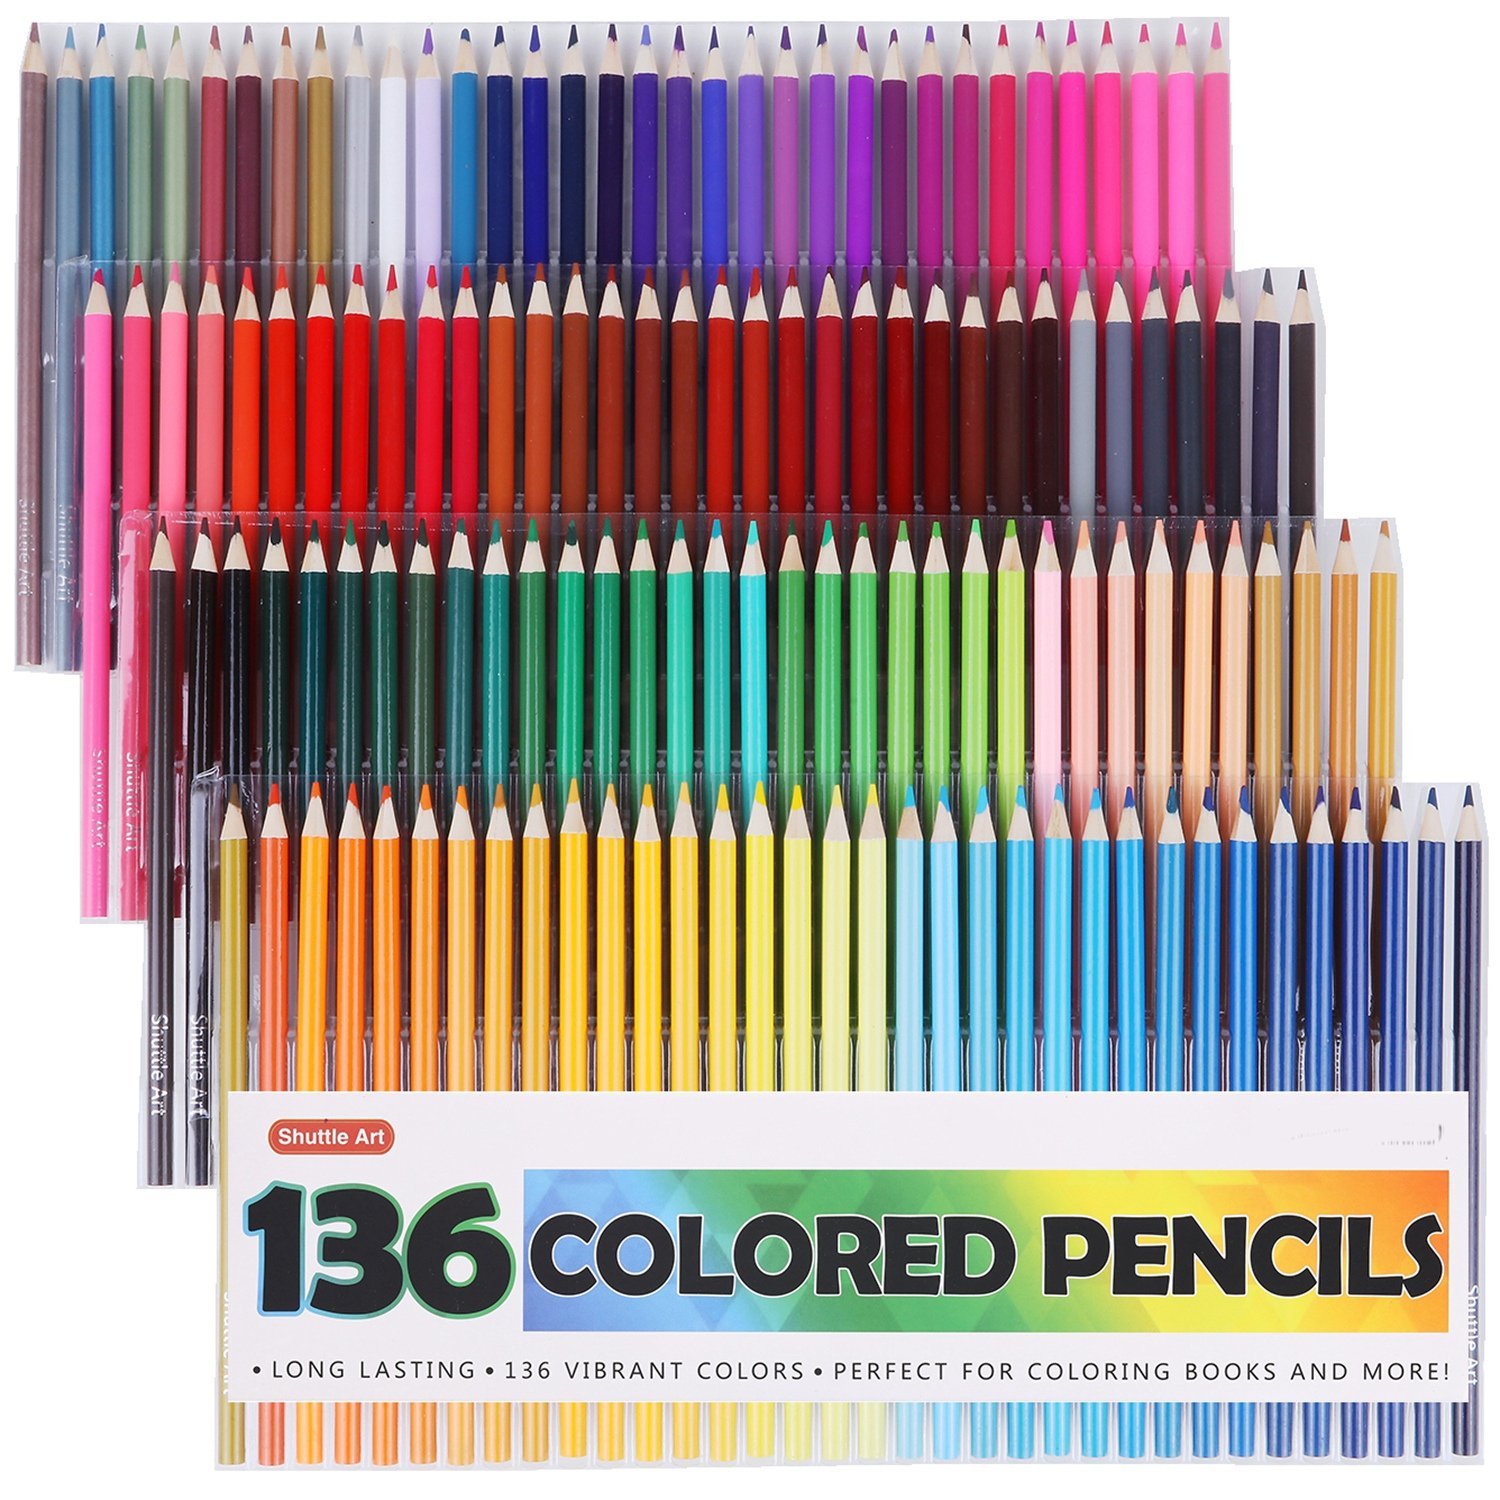 https://adultcoloringbooks.club/wp-content/uploads/2017/01/shuttle-art-colored-pencil-set.jpg